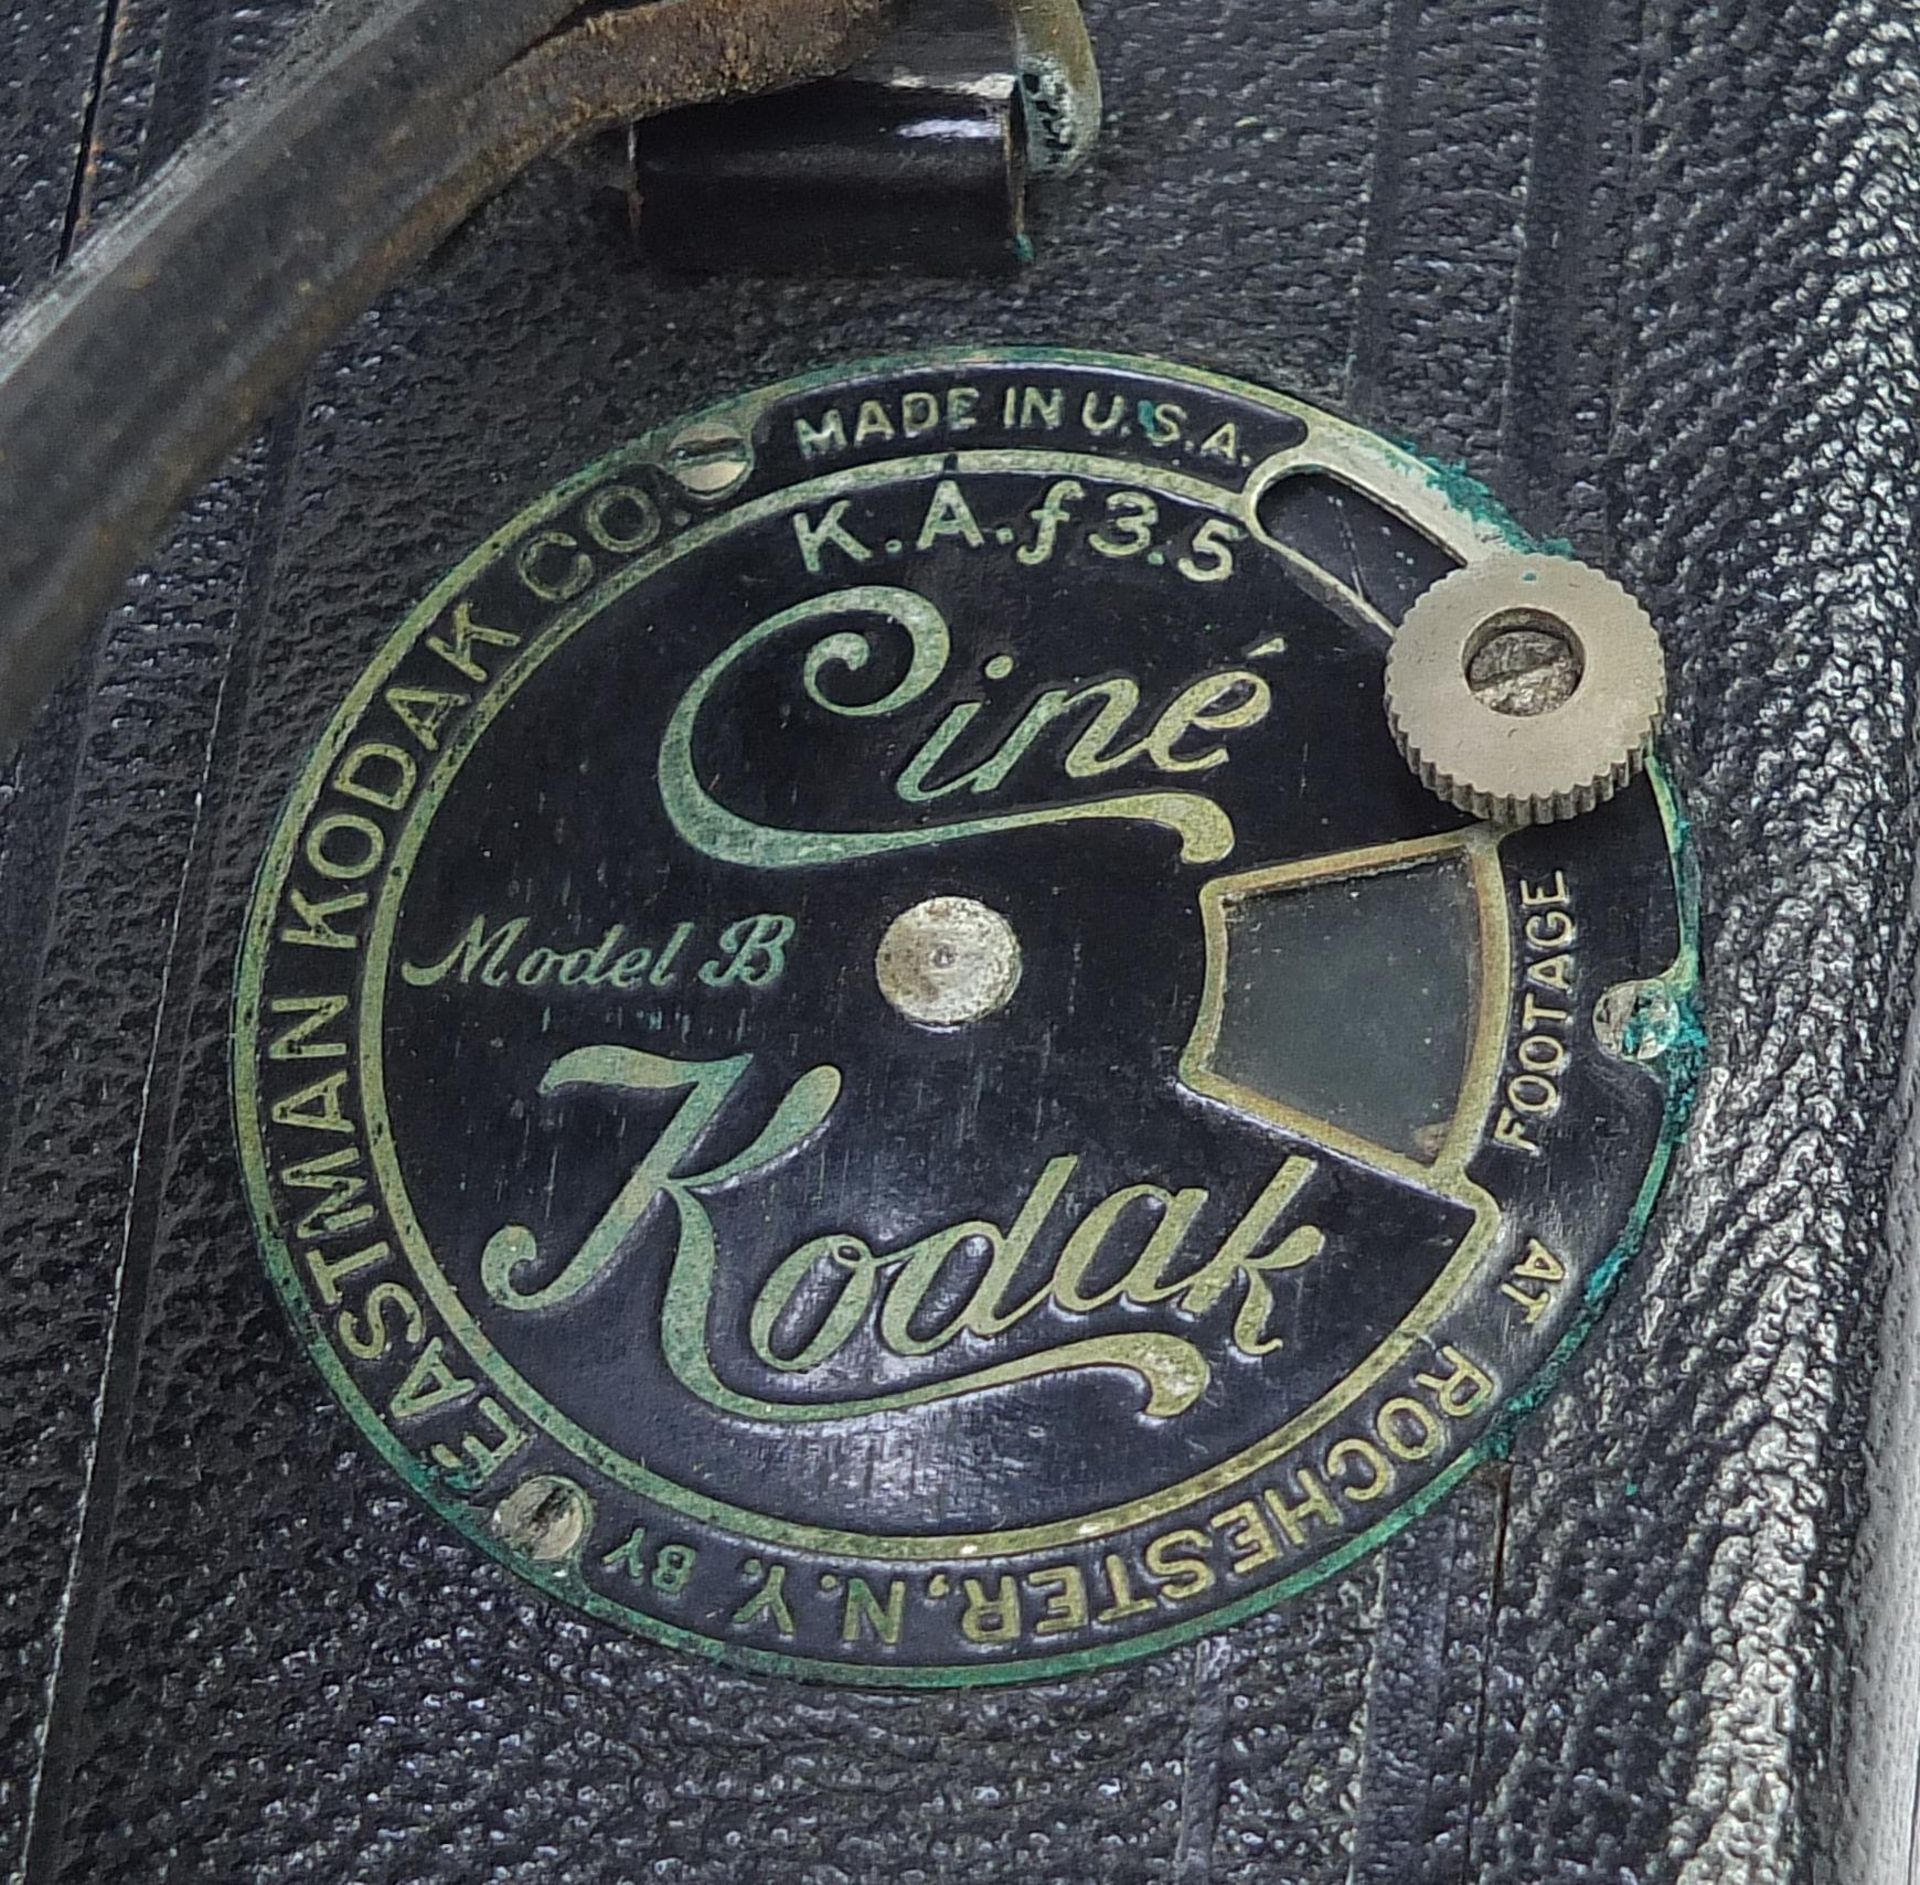 Vintage Kodak cine camera model B with .3.5 lens and leather case - Image 4 of 4